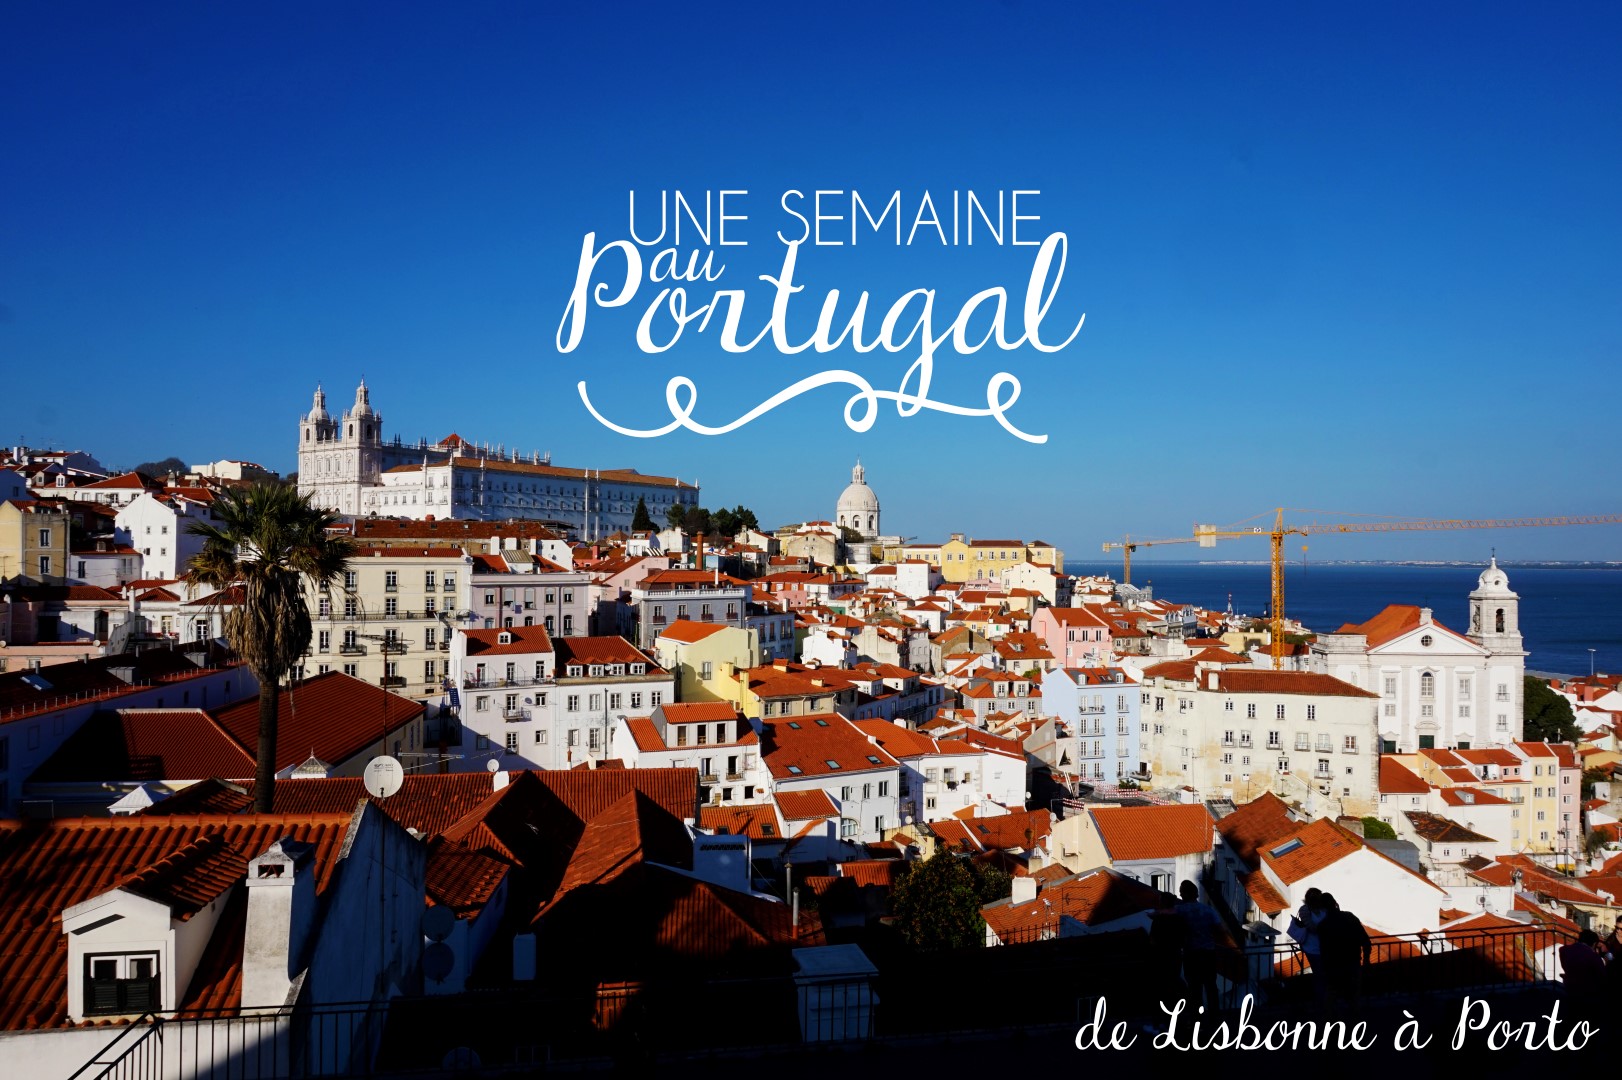 20160522_Une_semaine_portugal (Large)